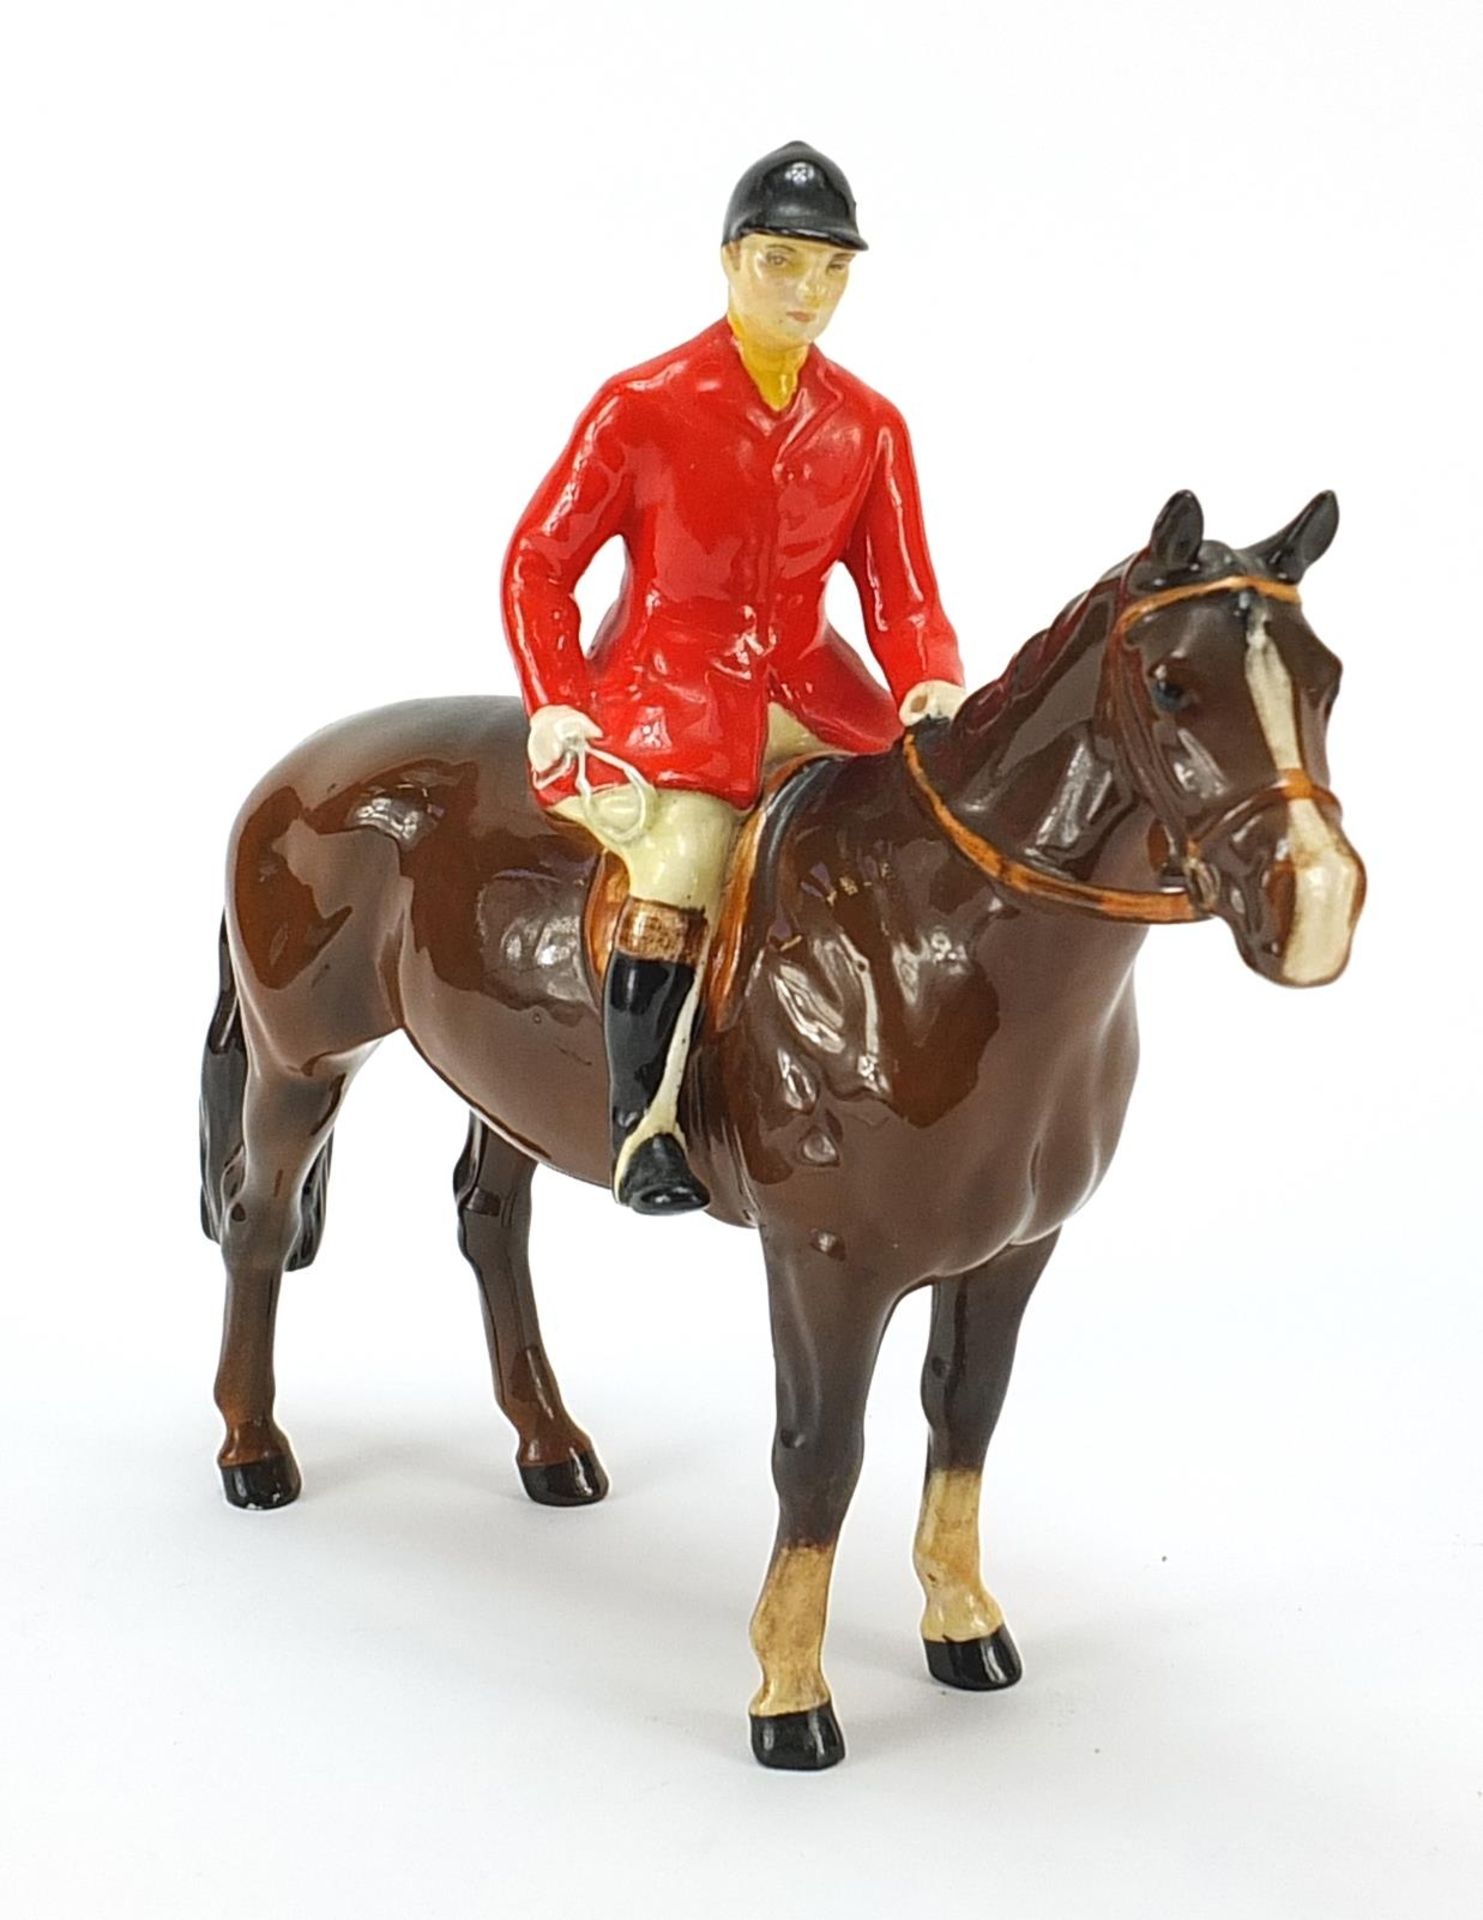 Beswick huntsman on horseback, 22cm in length